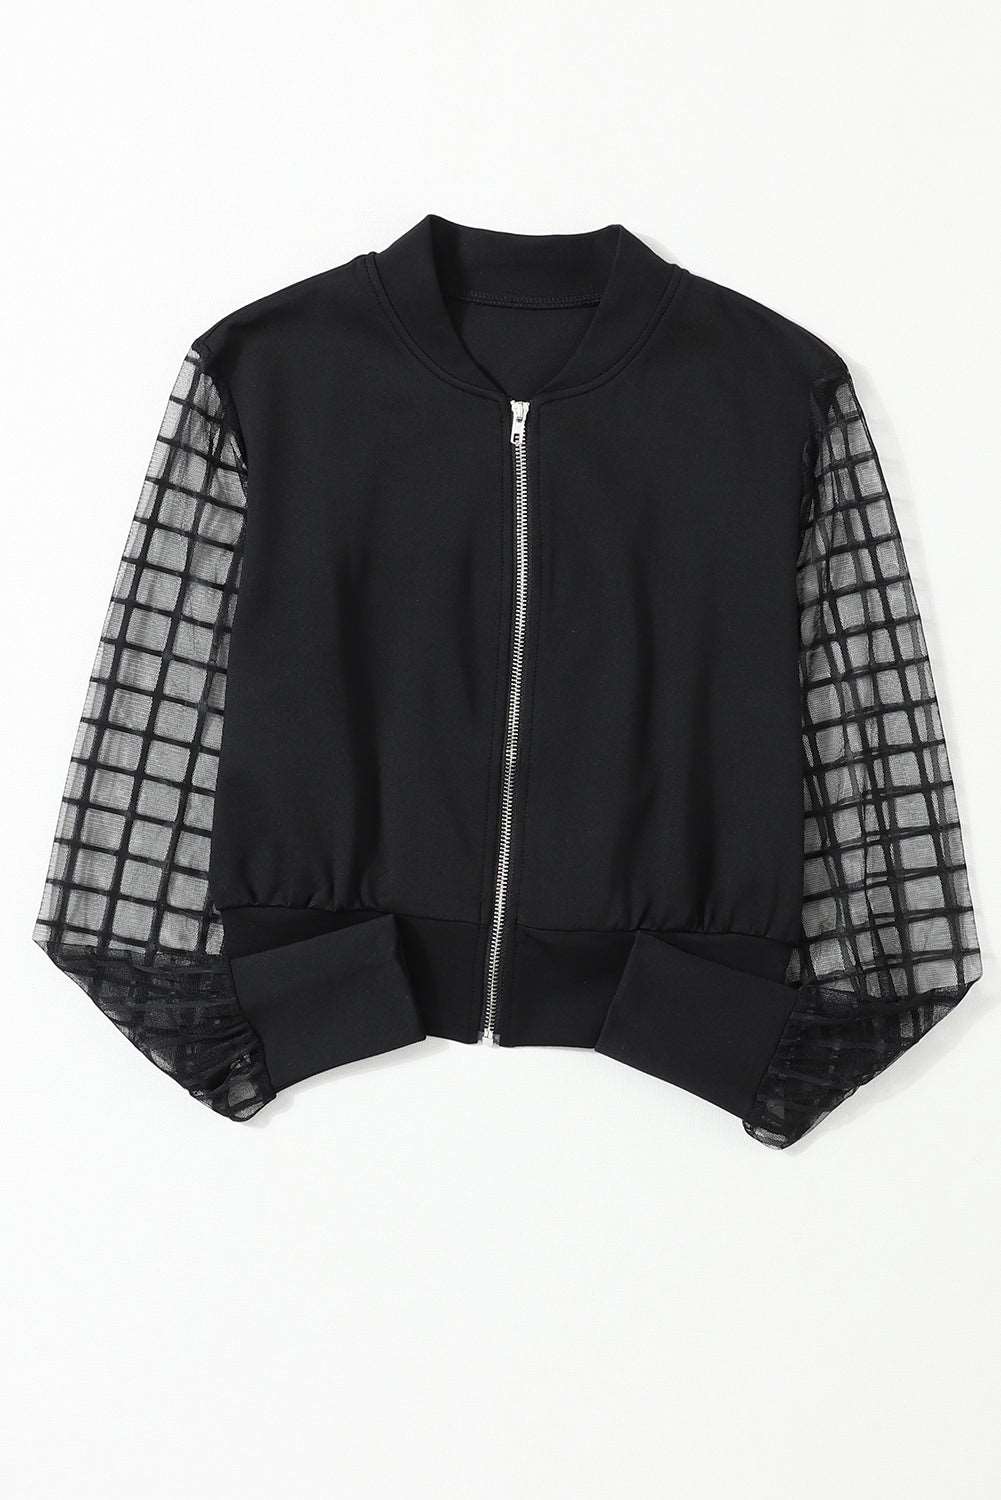 Black Lattice Mesh Sleeve Zipper Bomber Jacket - Bellisima Clothing Collective